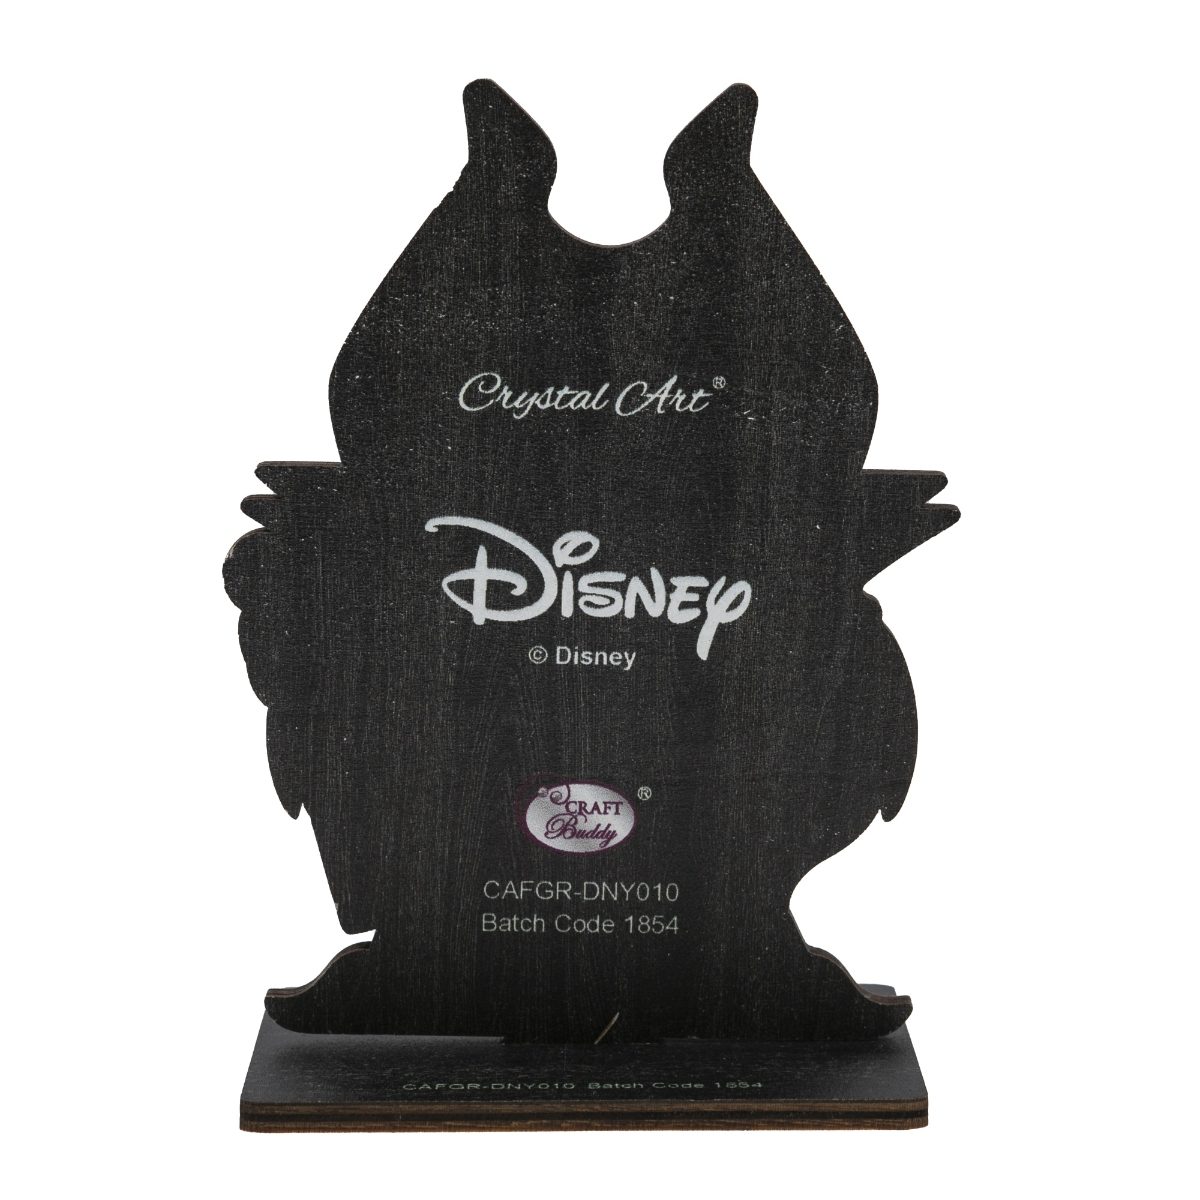 Craft Buddy's Disney 100 Crystal Art range now back in stock